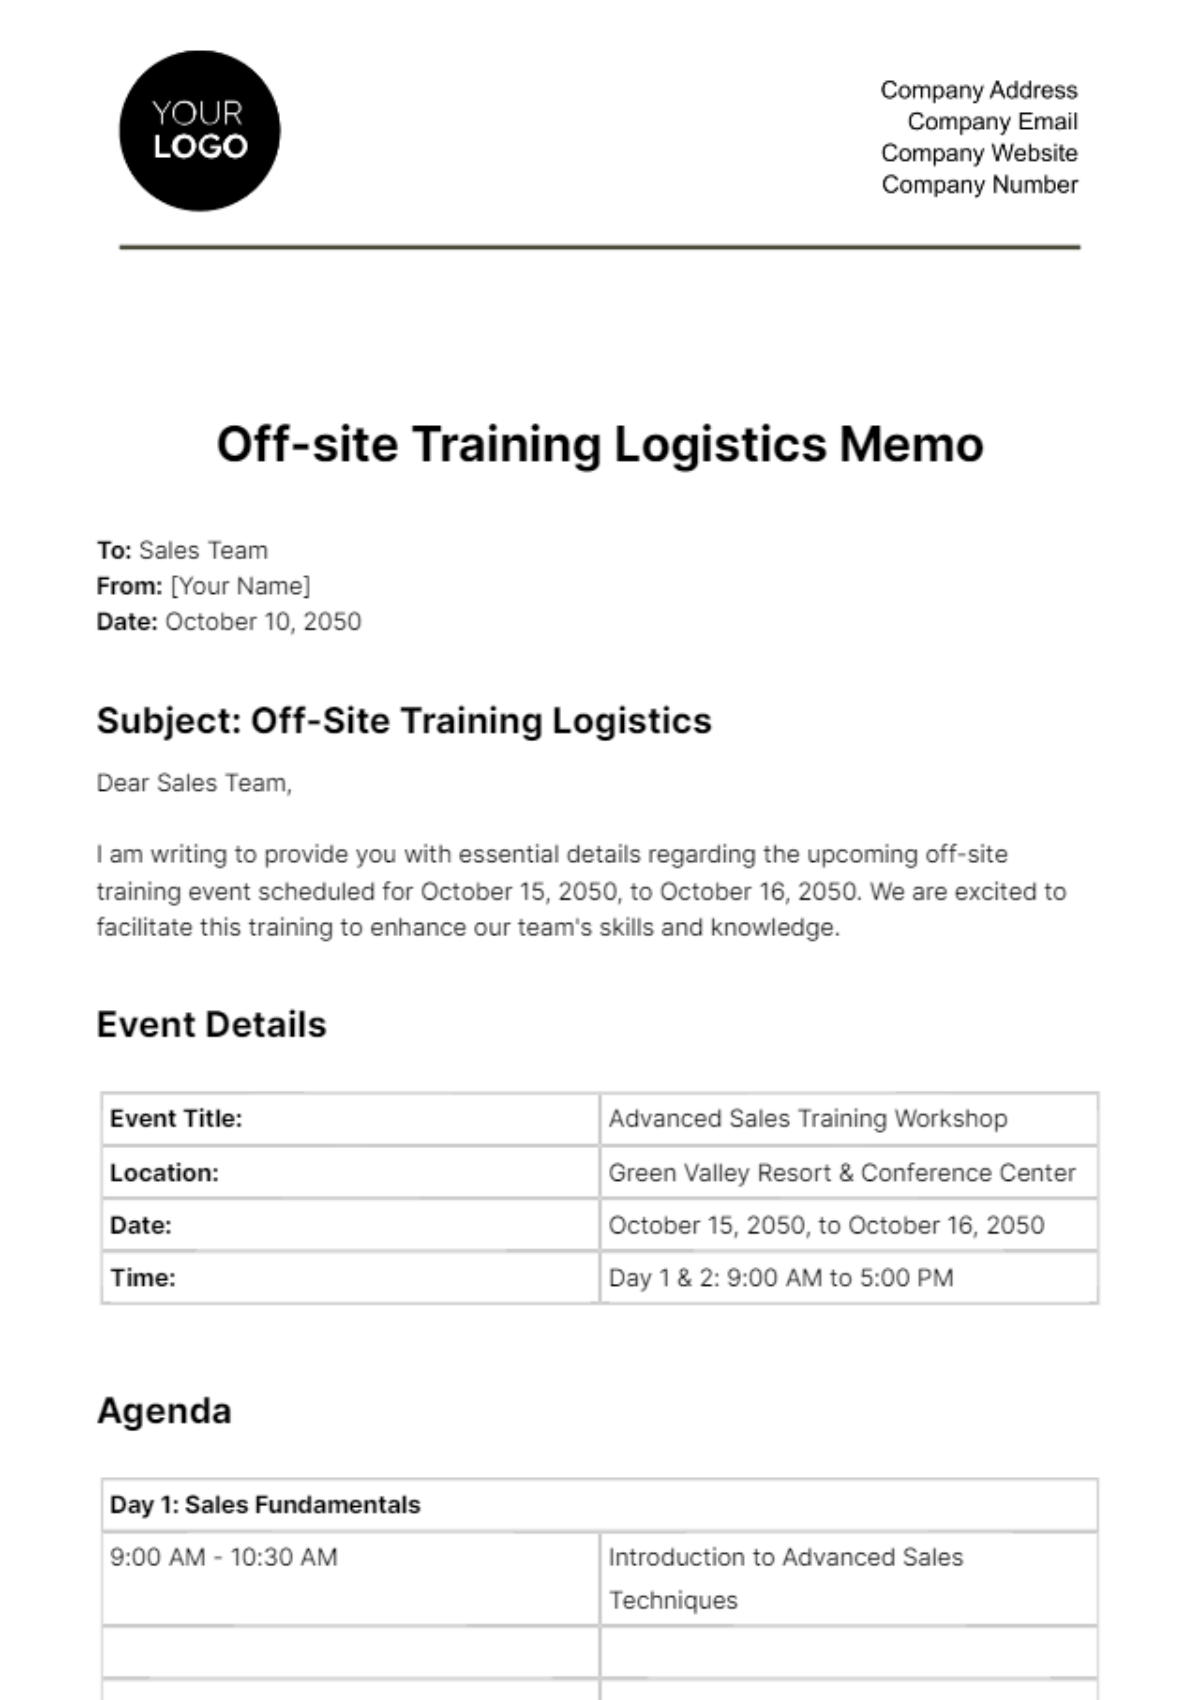 Off-site Training Logistics Memo HR Template